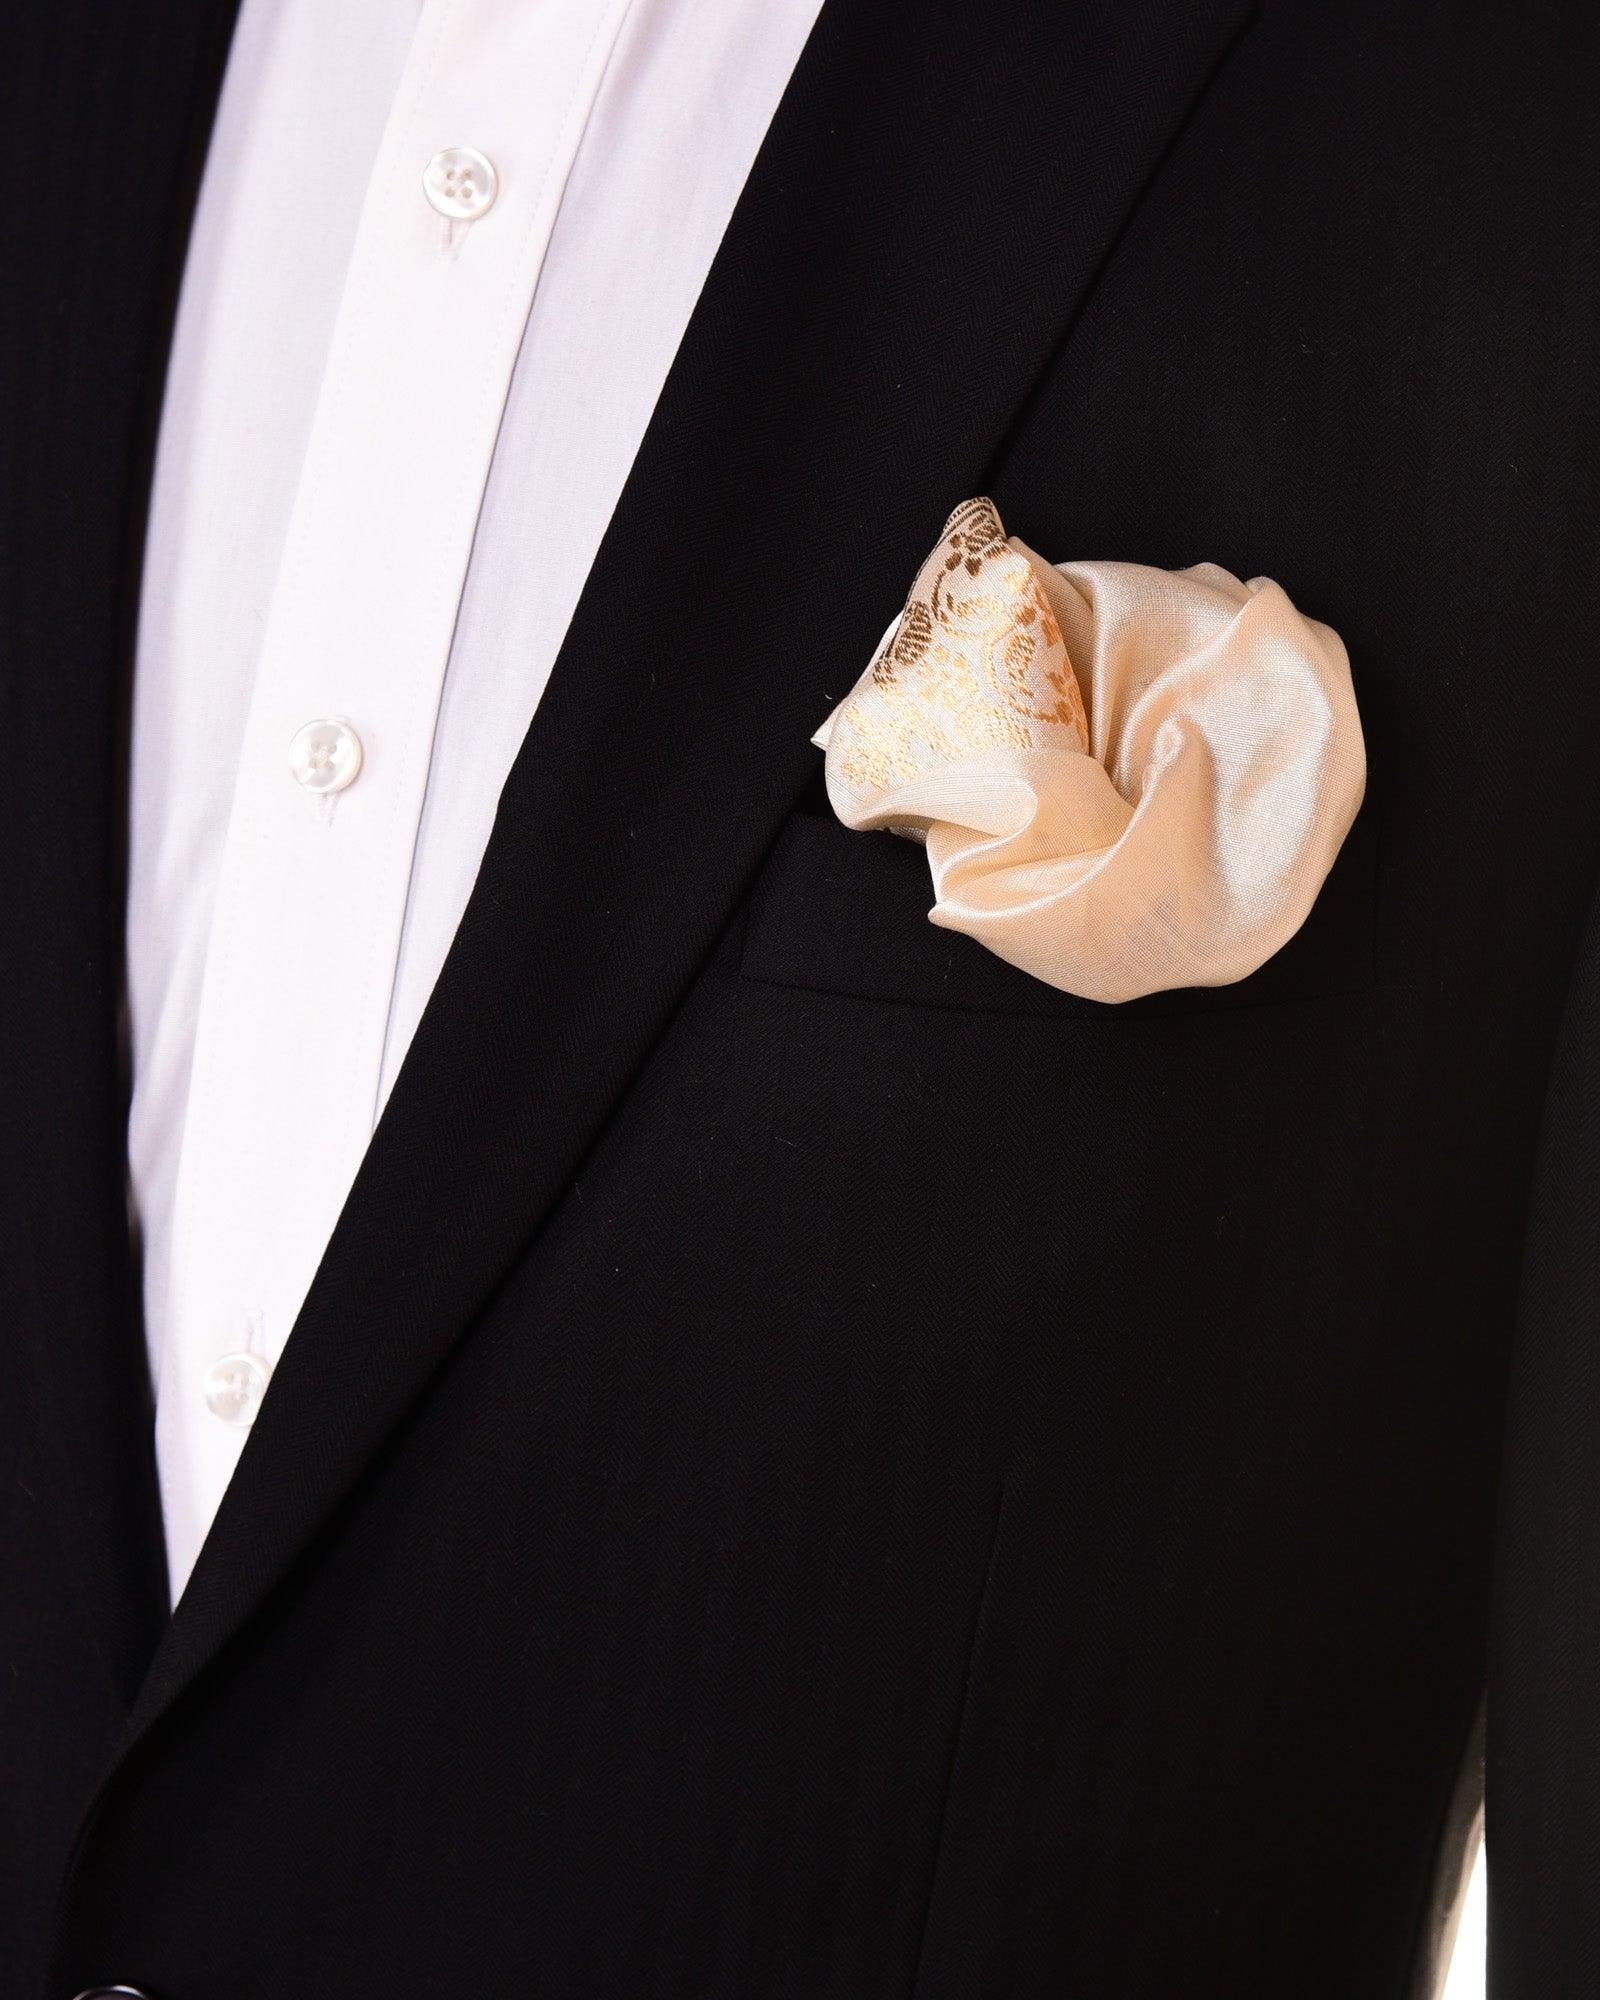 Cream Zari Brocade Handwoven Pure Silk Pocket Square For Men - By HolyWeaves, Benares